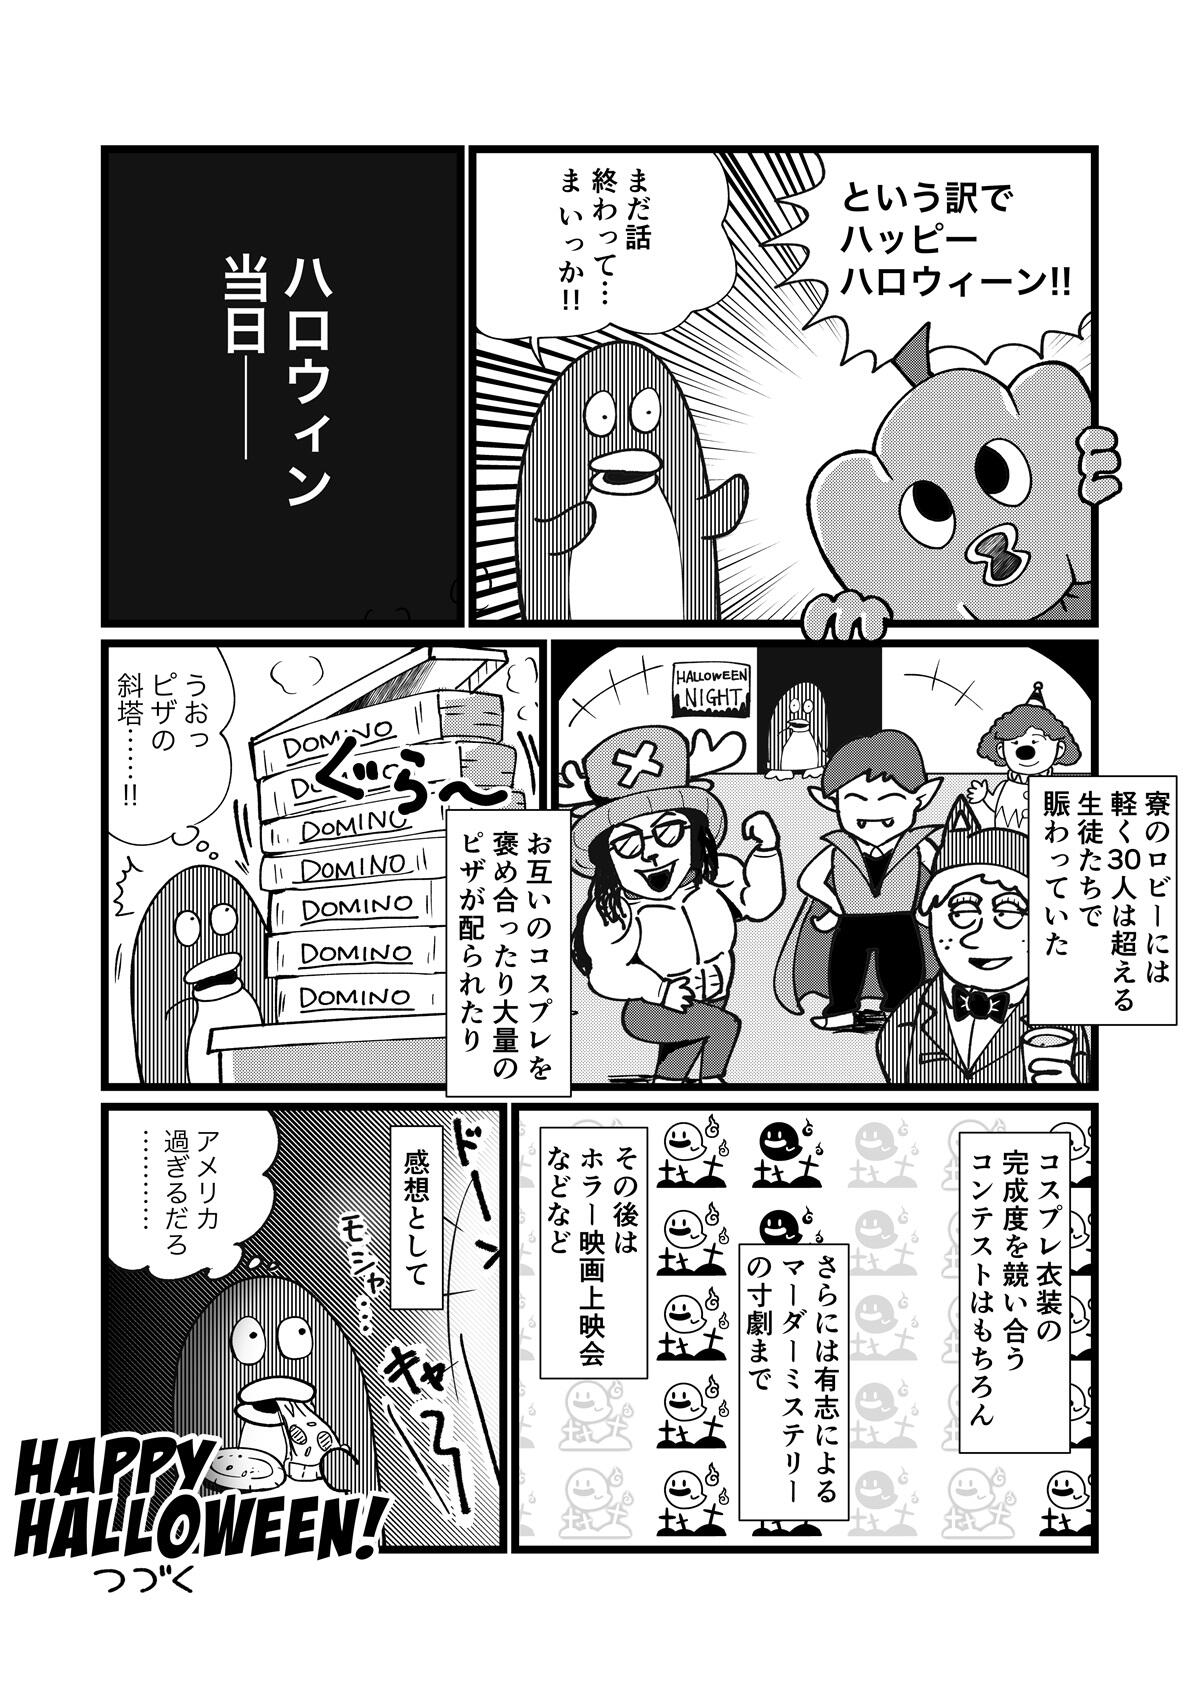 https://www.ryugaku.co.jp/column/images/jawamura25_6_1200.jpg